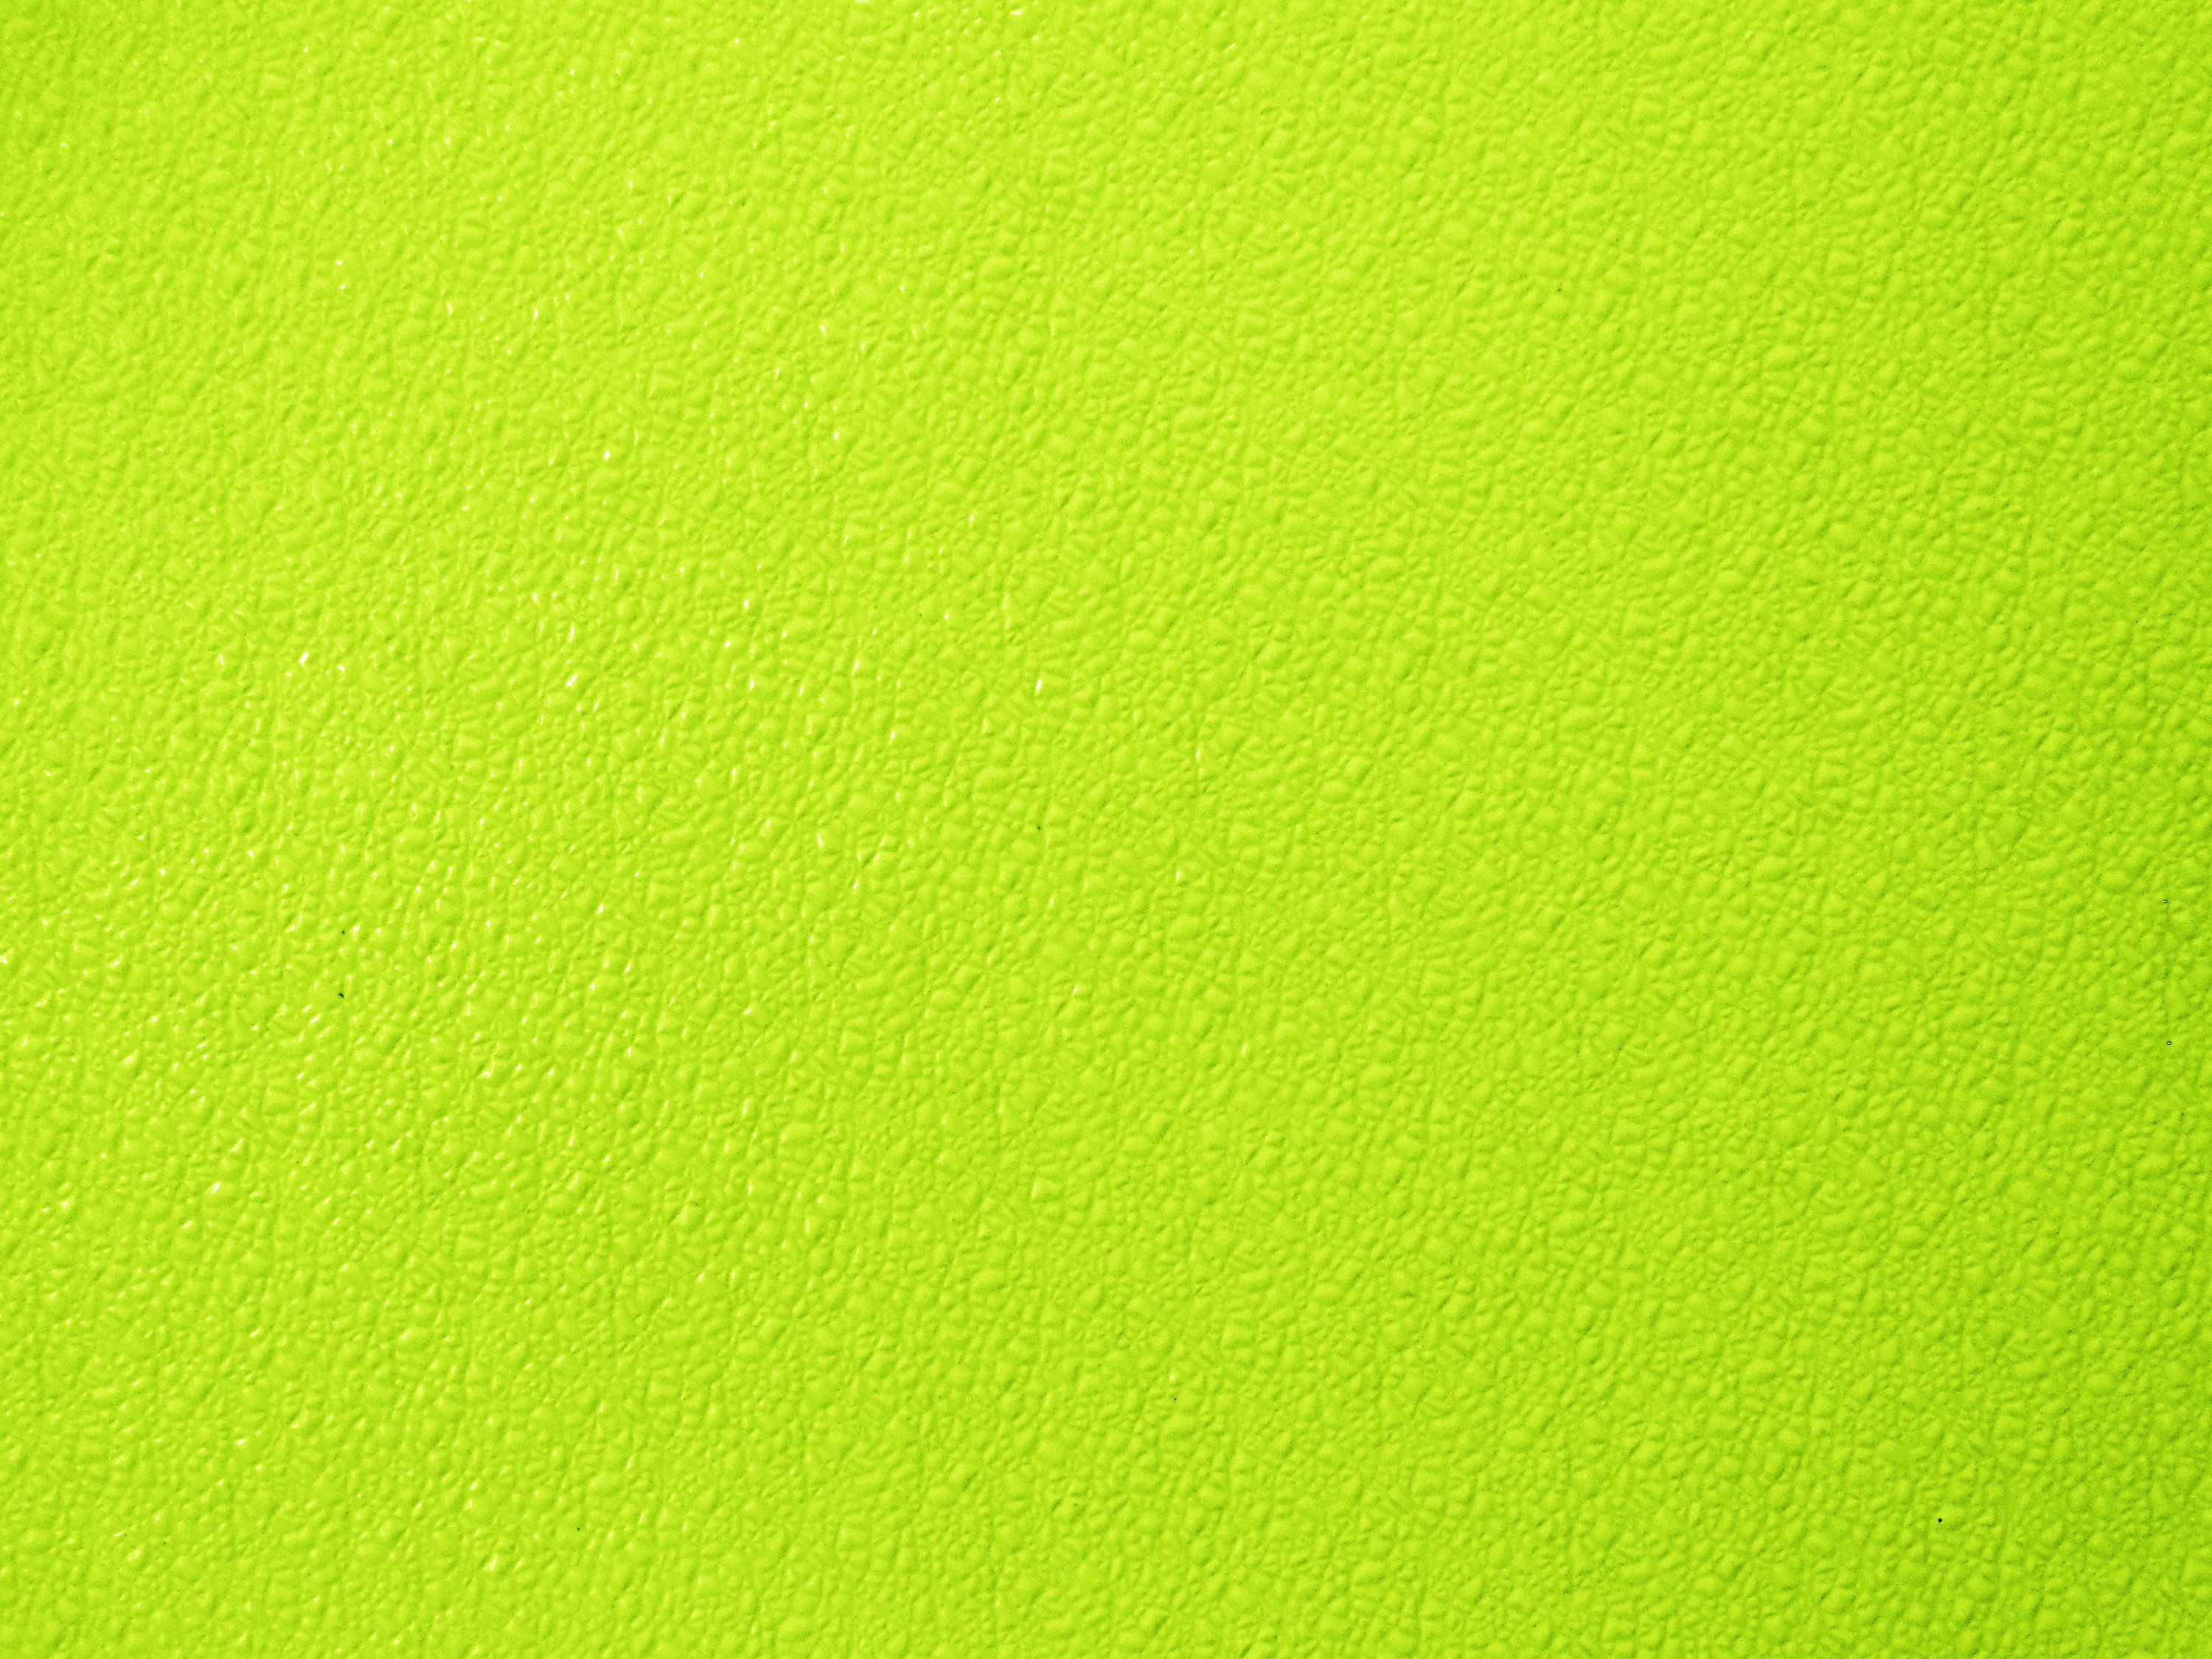 Bumpy Chartreuse Plastic Texture Picture Photograph